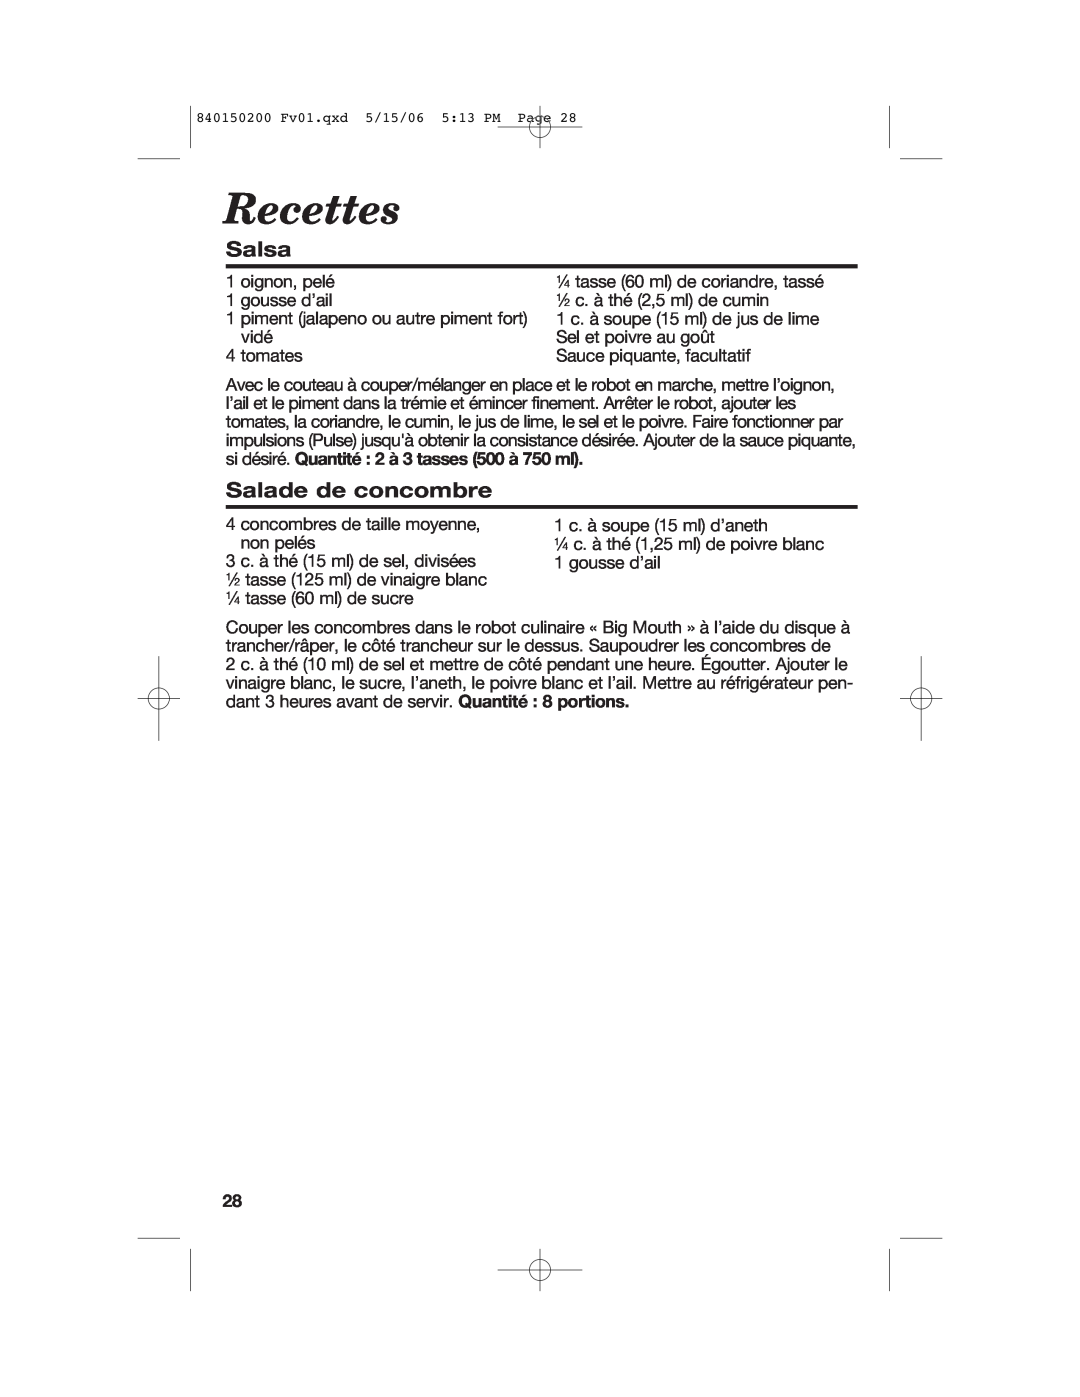 Proctor-Silex 840150200 manual Recettes, Salsa, Salade de concombre 